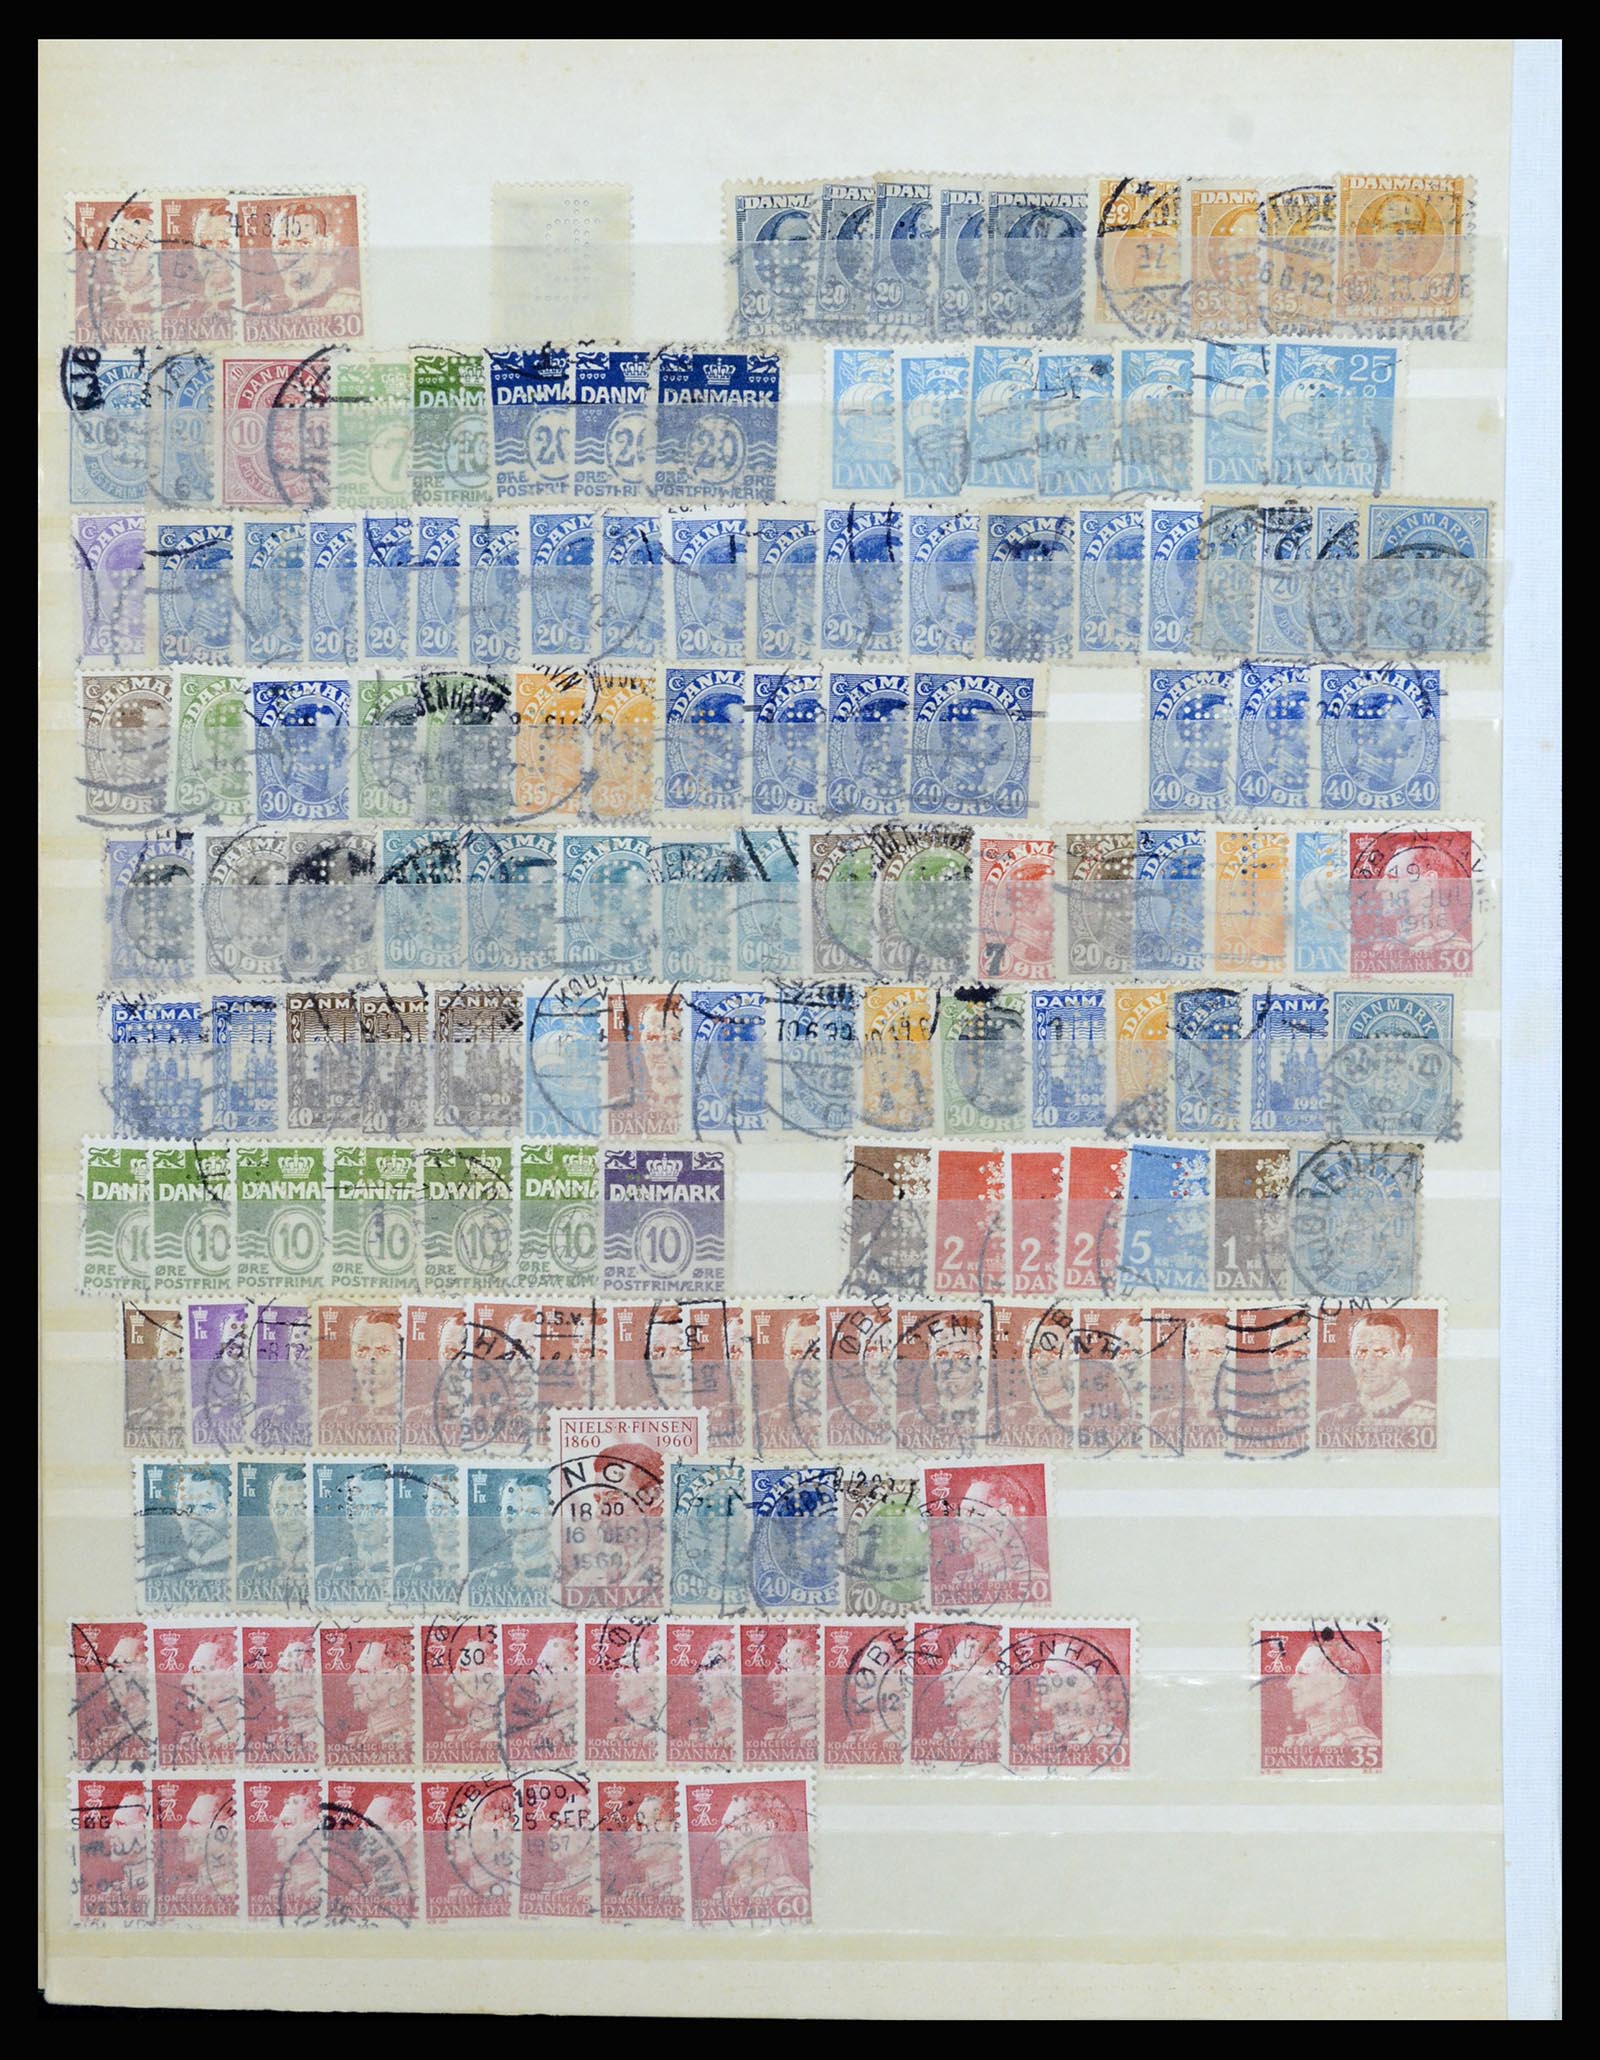 37056 082 - Stamp collection 37056 Denmark perfins.